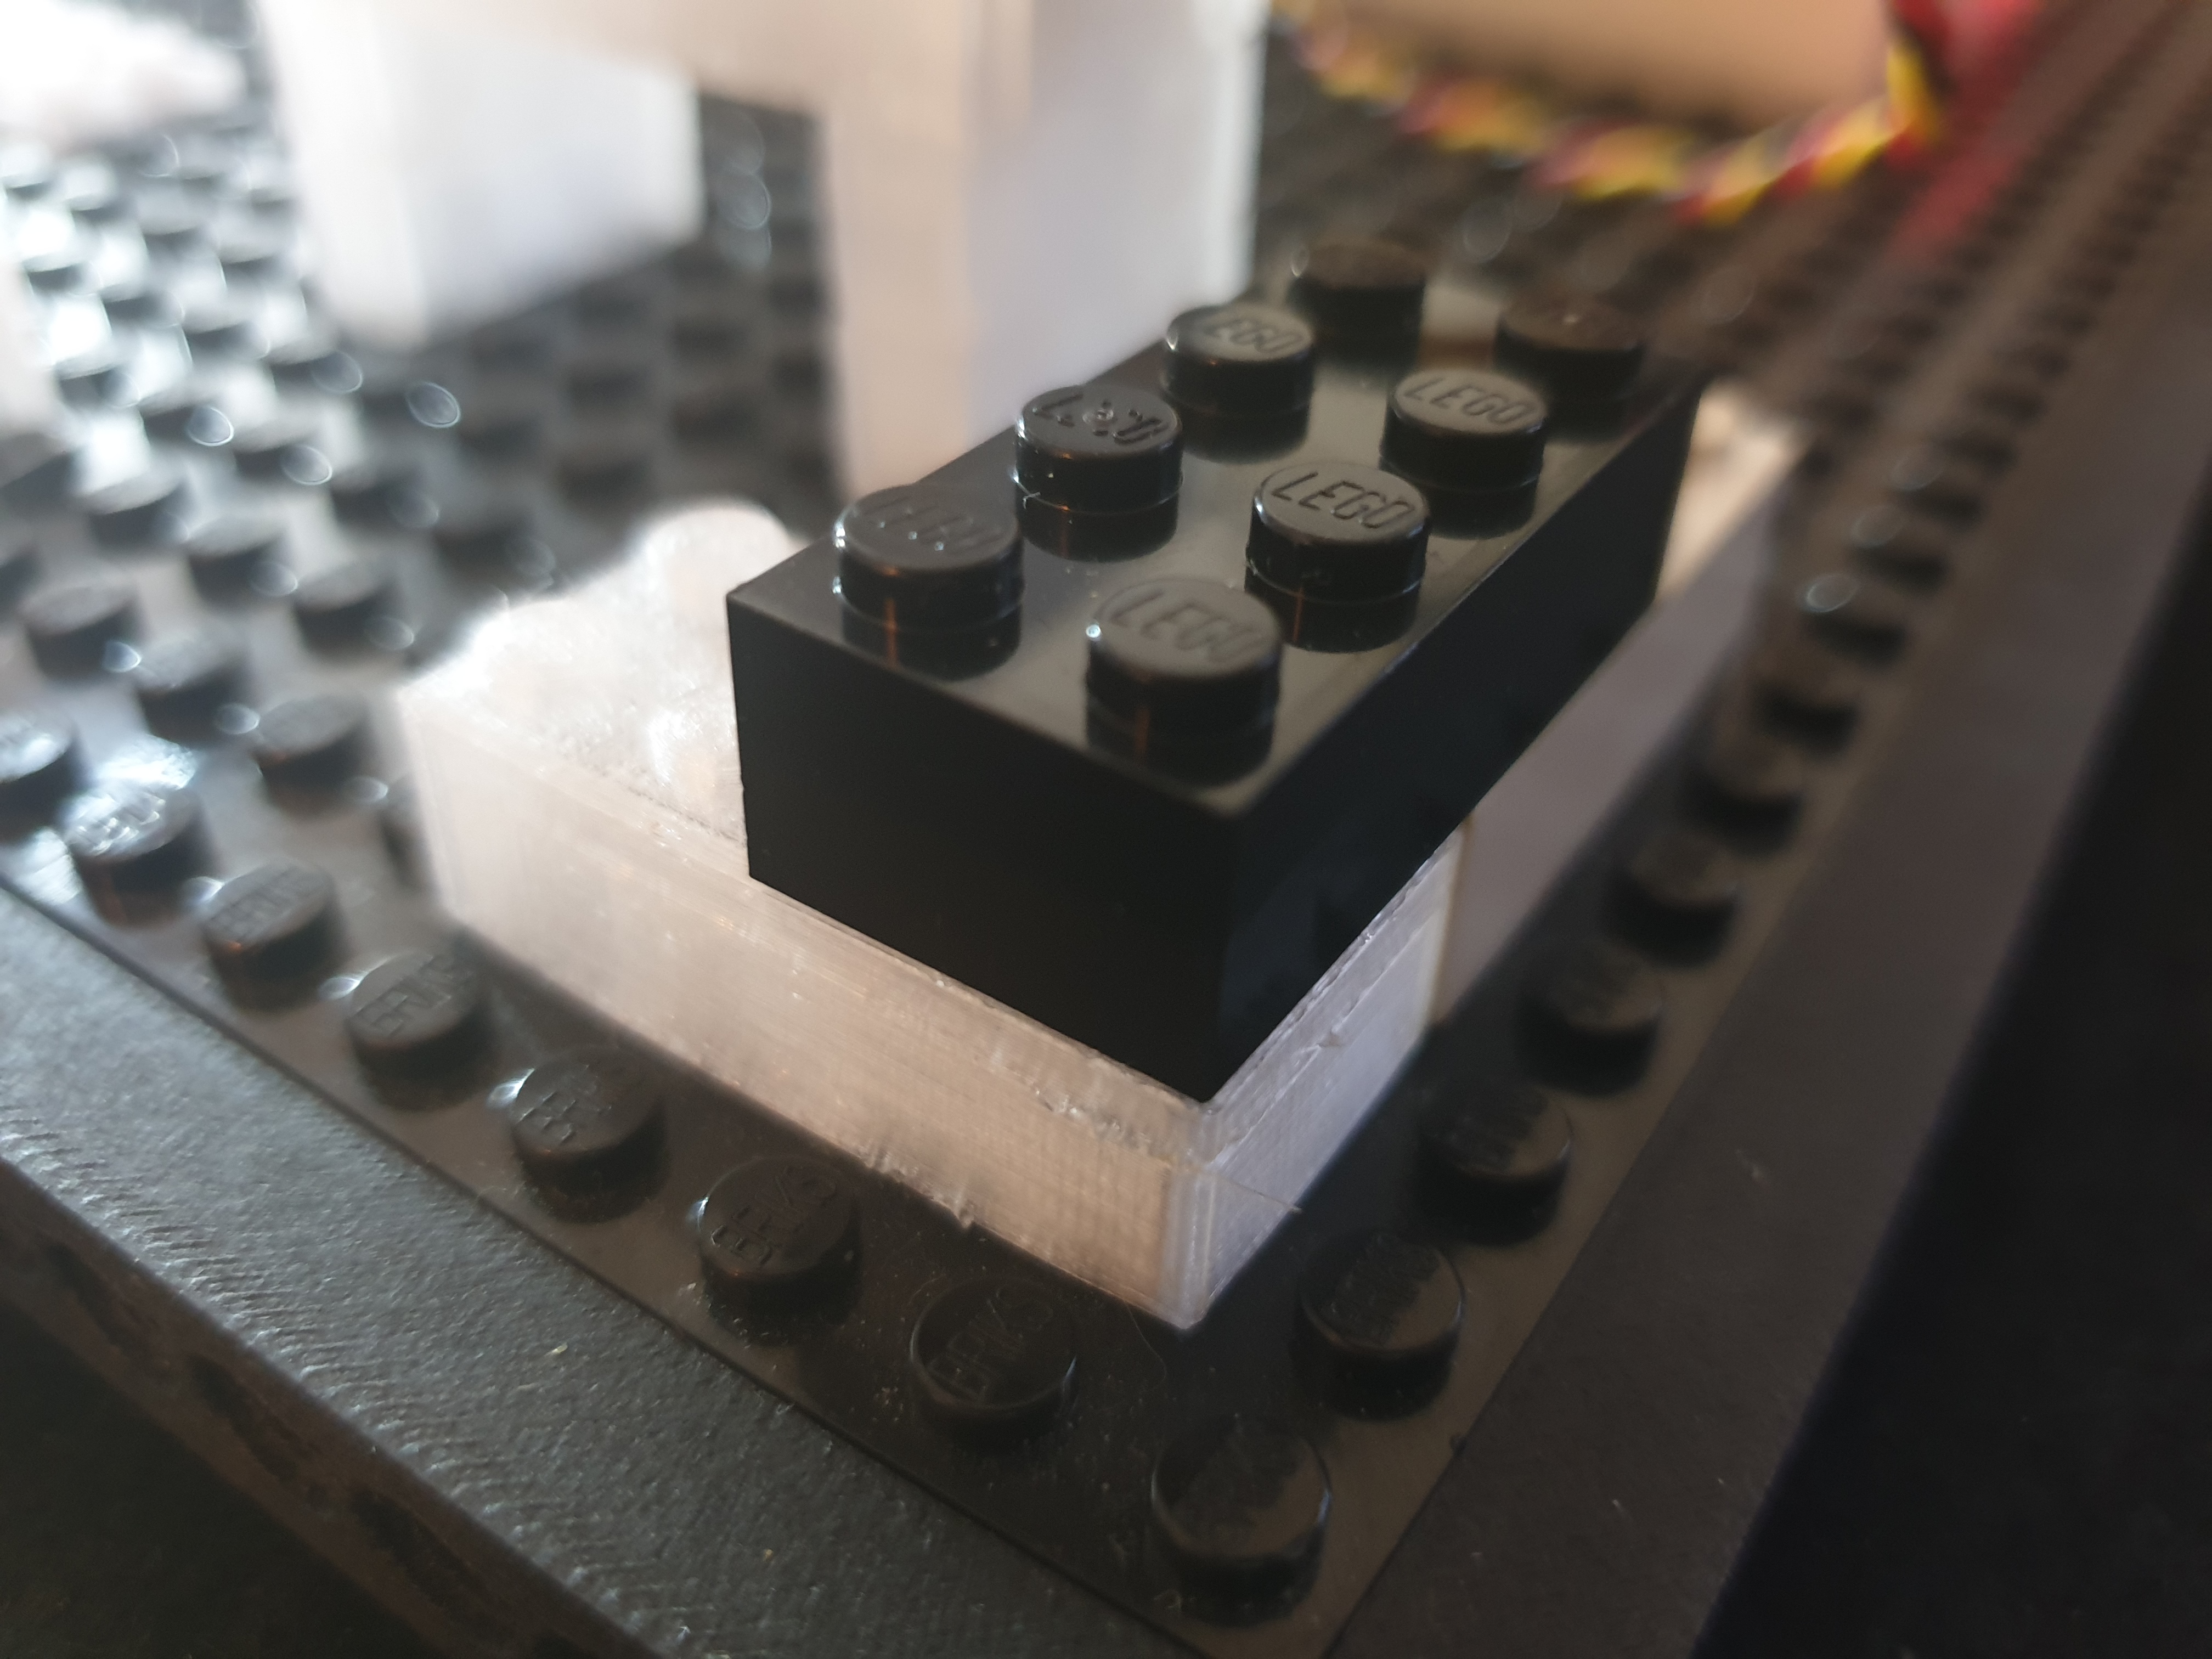 The 3d printed LEGO brick fits well on the original LEGO bricks